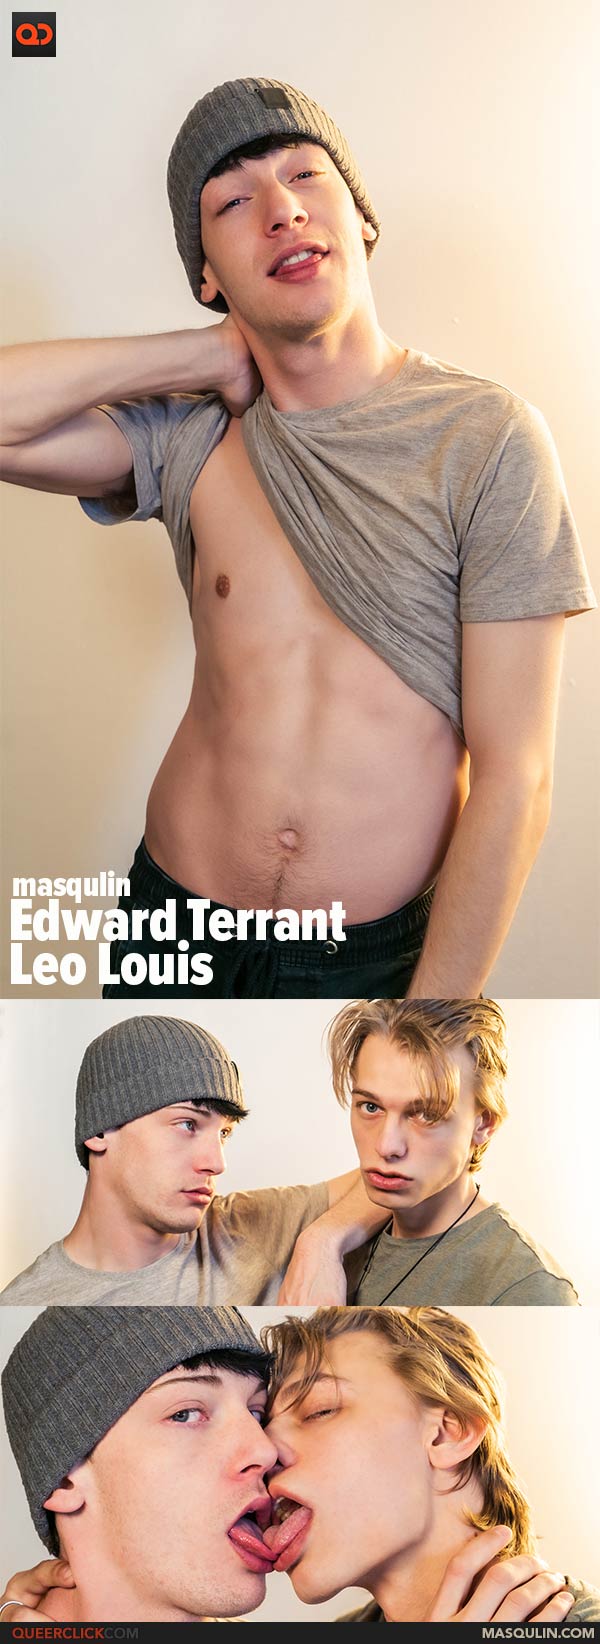 Masqulin: Edward Terrant and Leo Louis